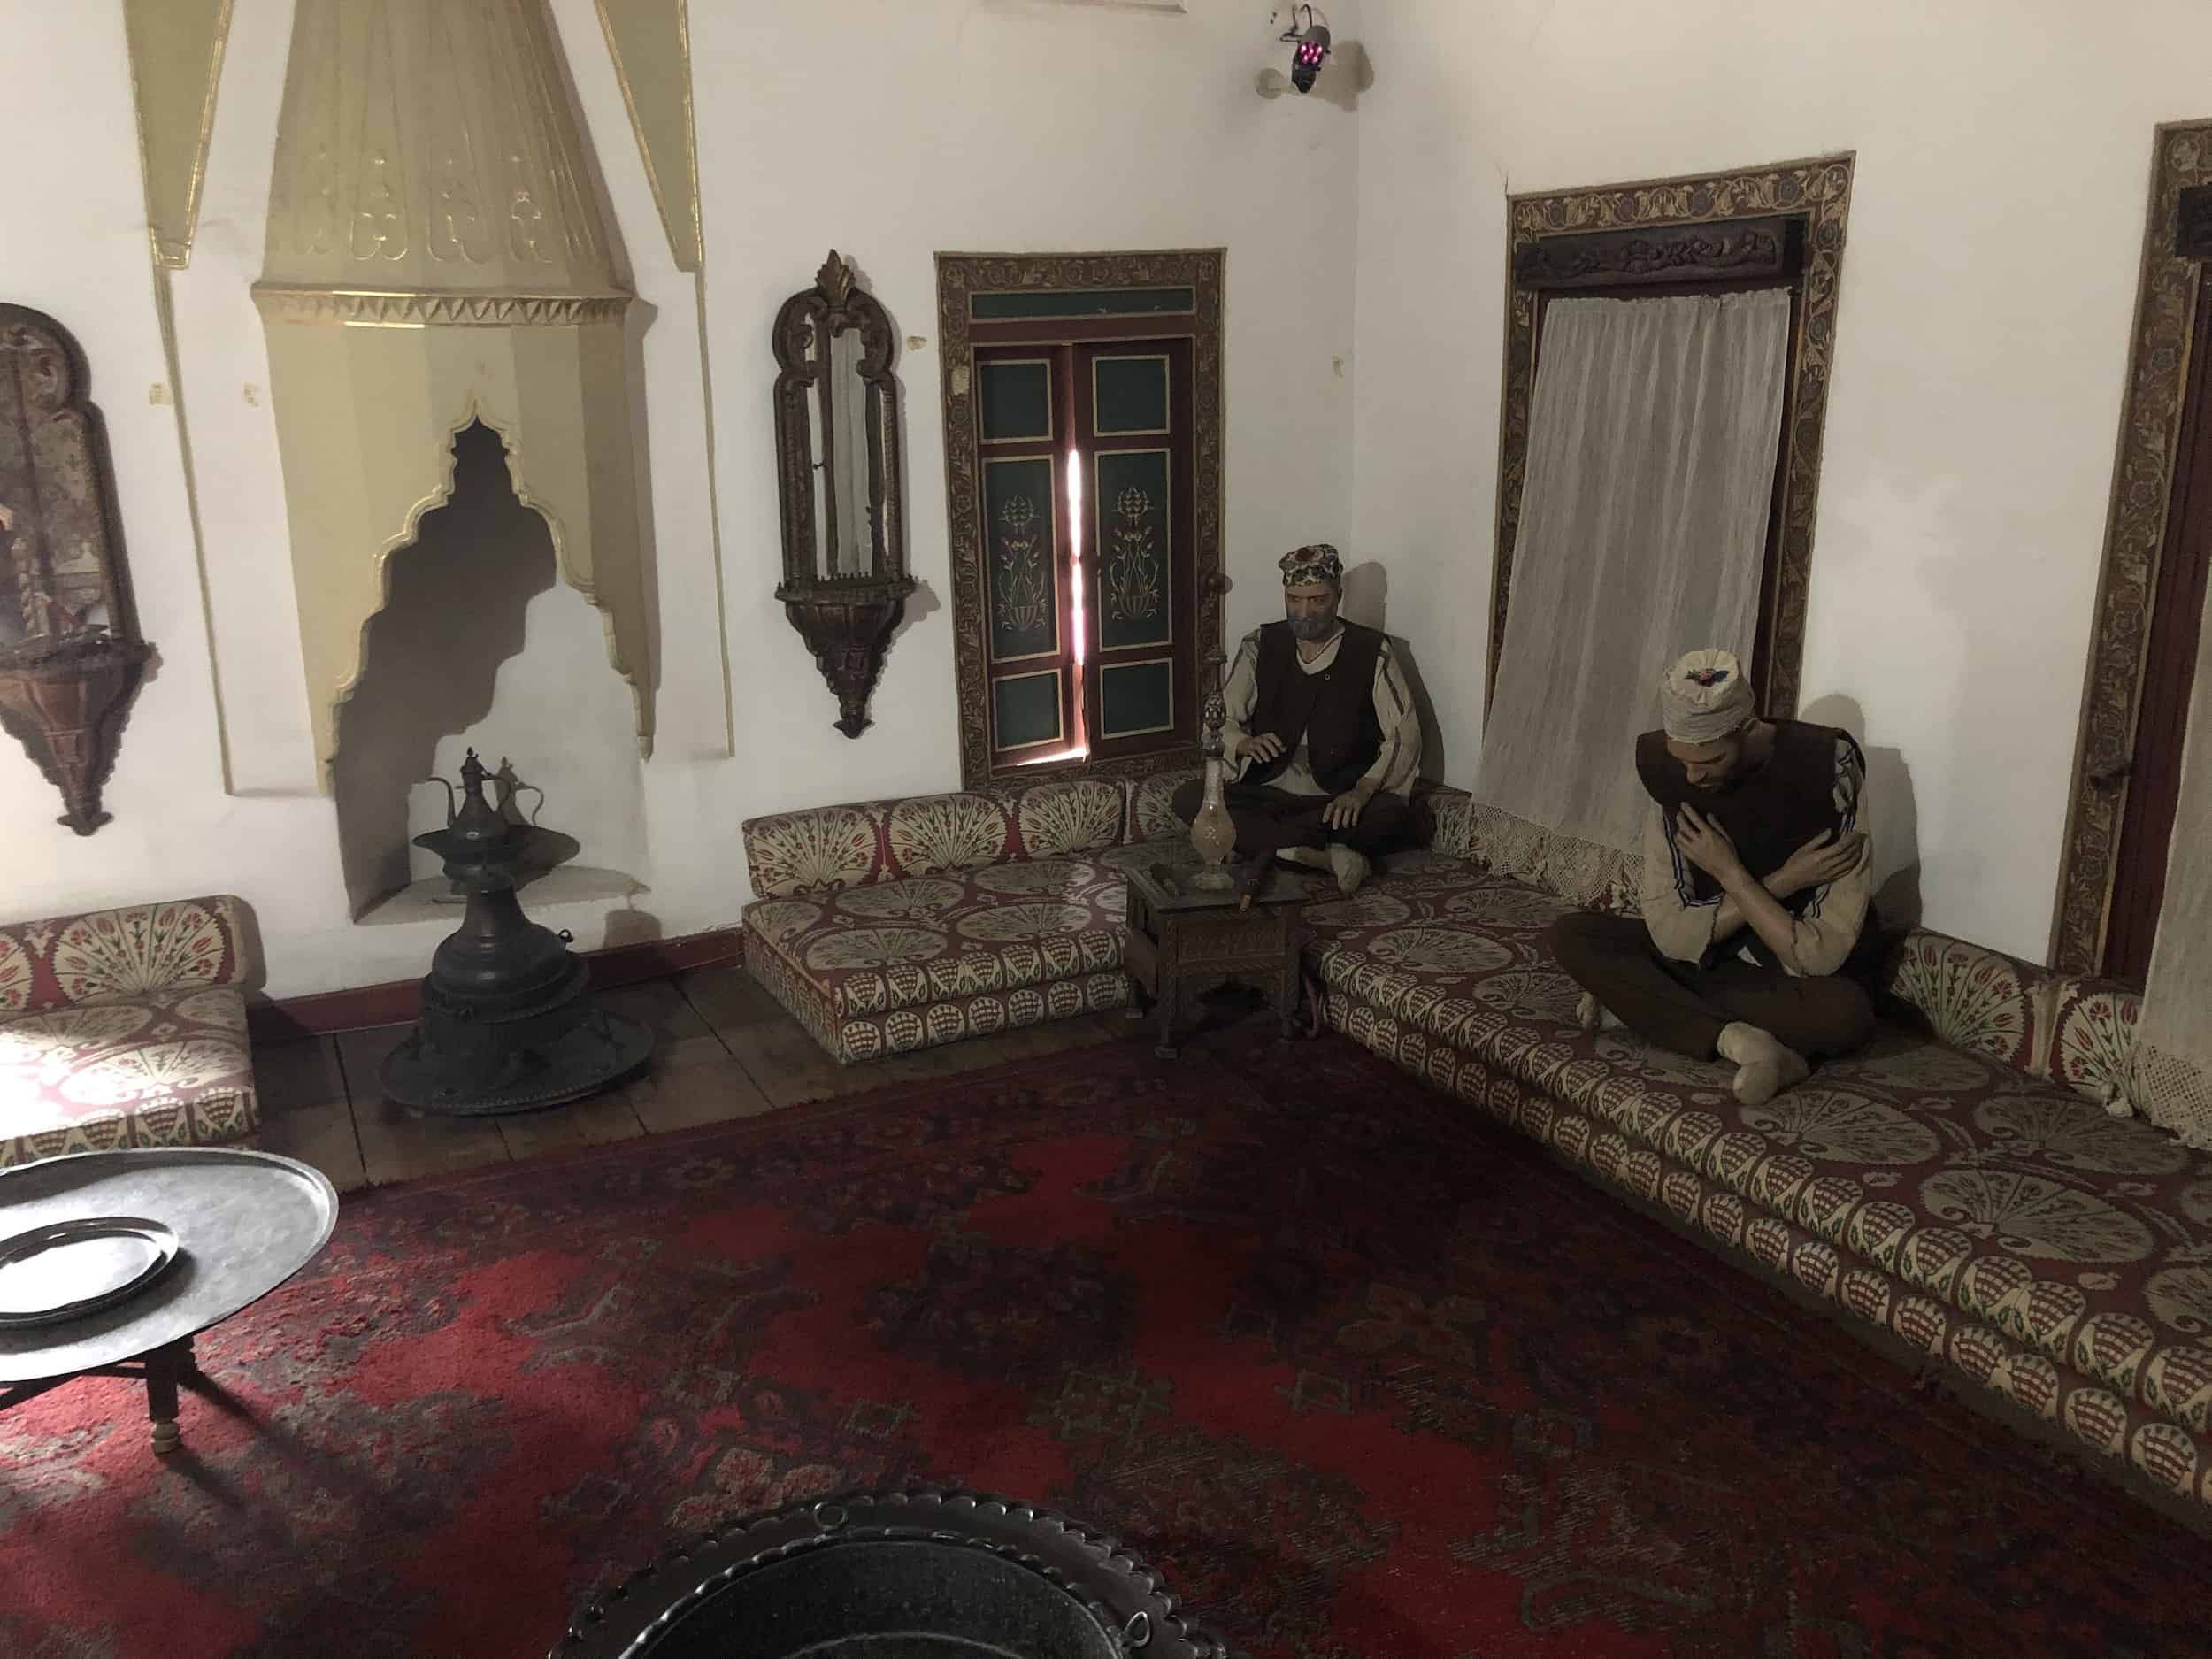 Men's room at the Ottoman House Museum in Bursa, Turkey